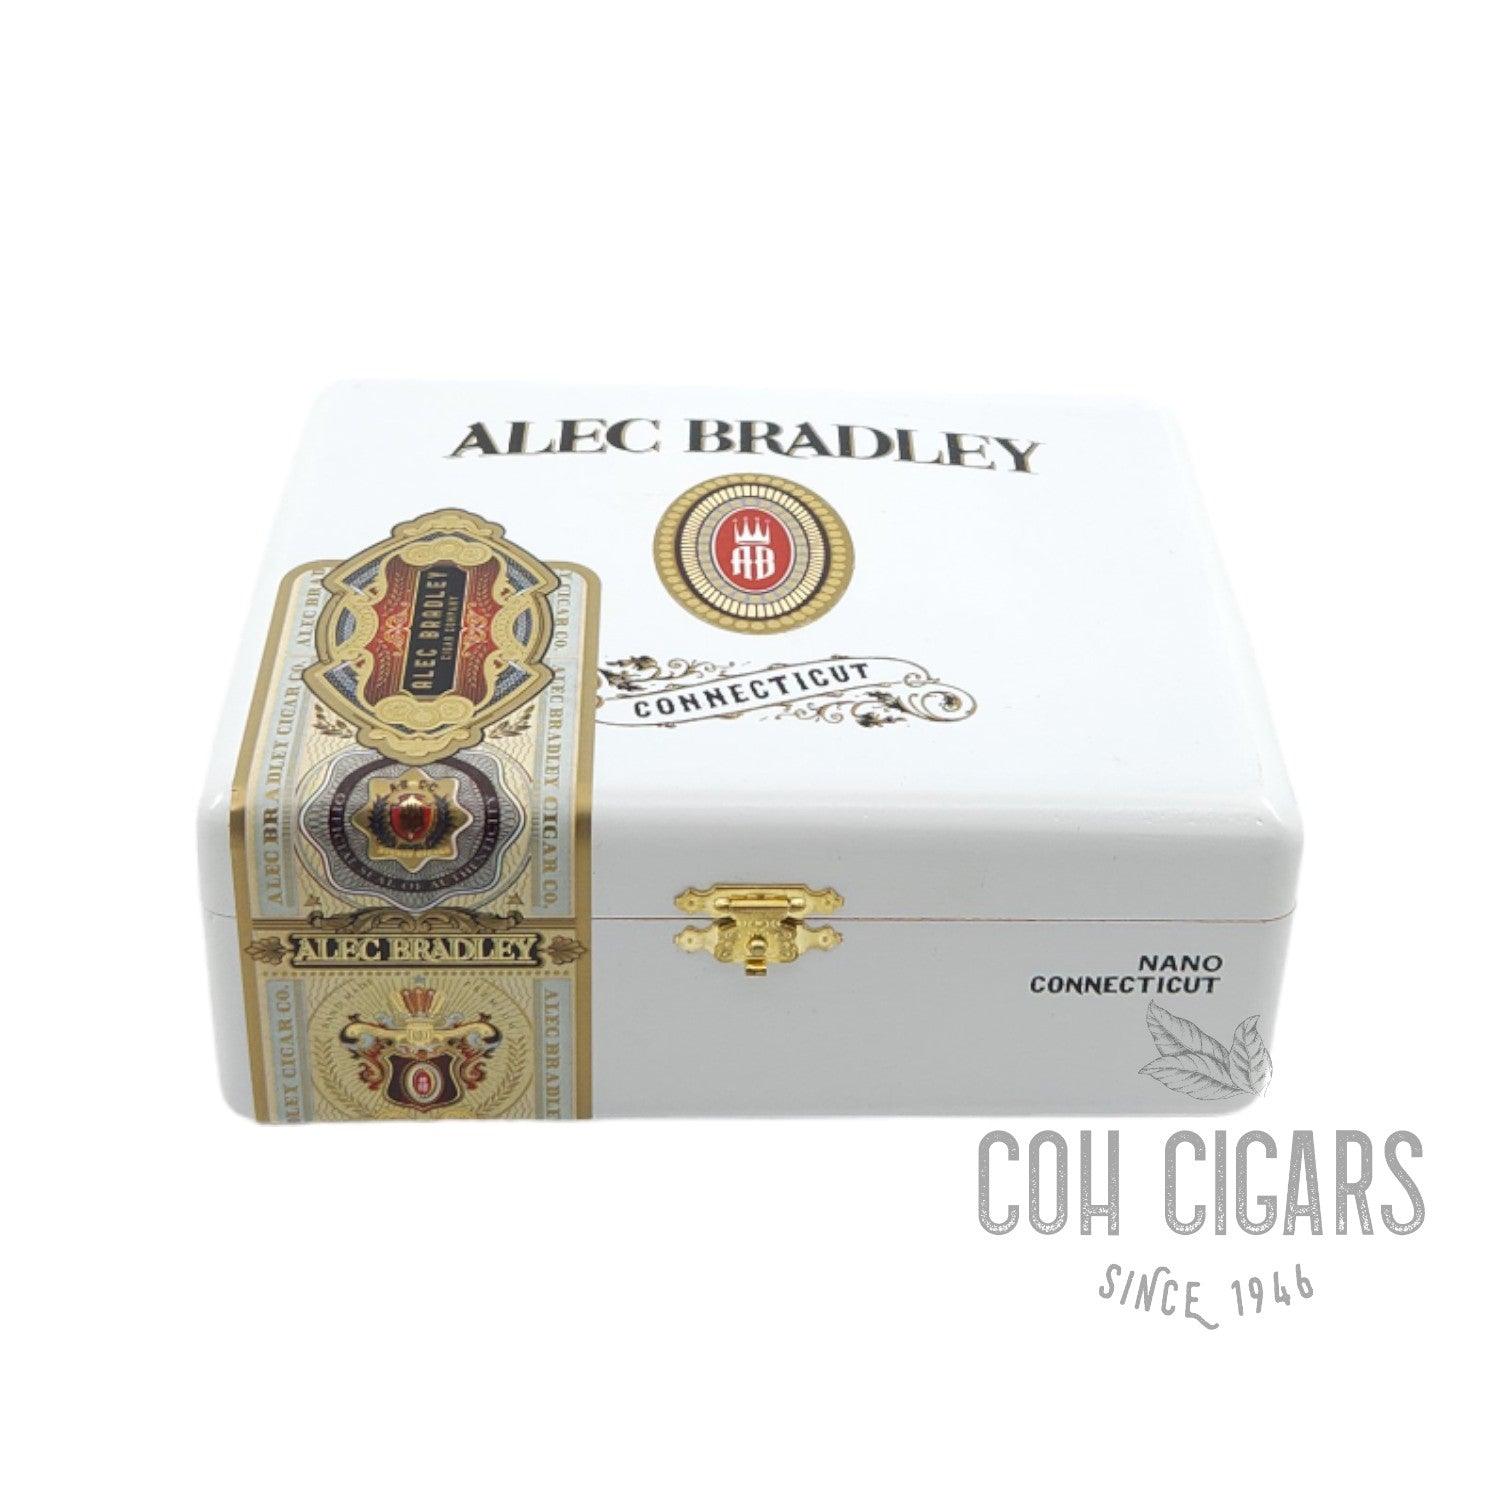 Alec Bradley Cigar | Connecticut Nano | Box 24 - hk.cohcigars